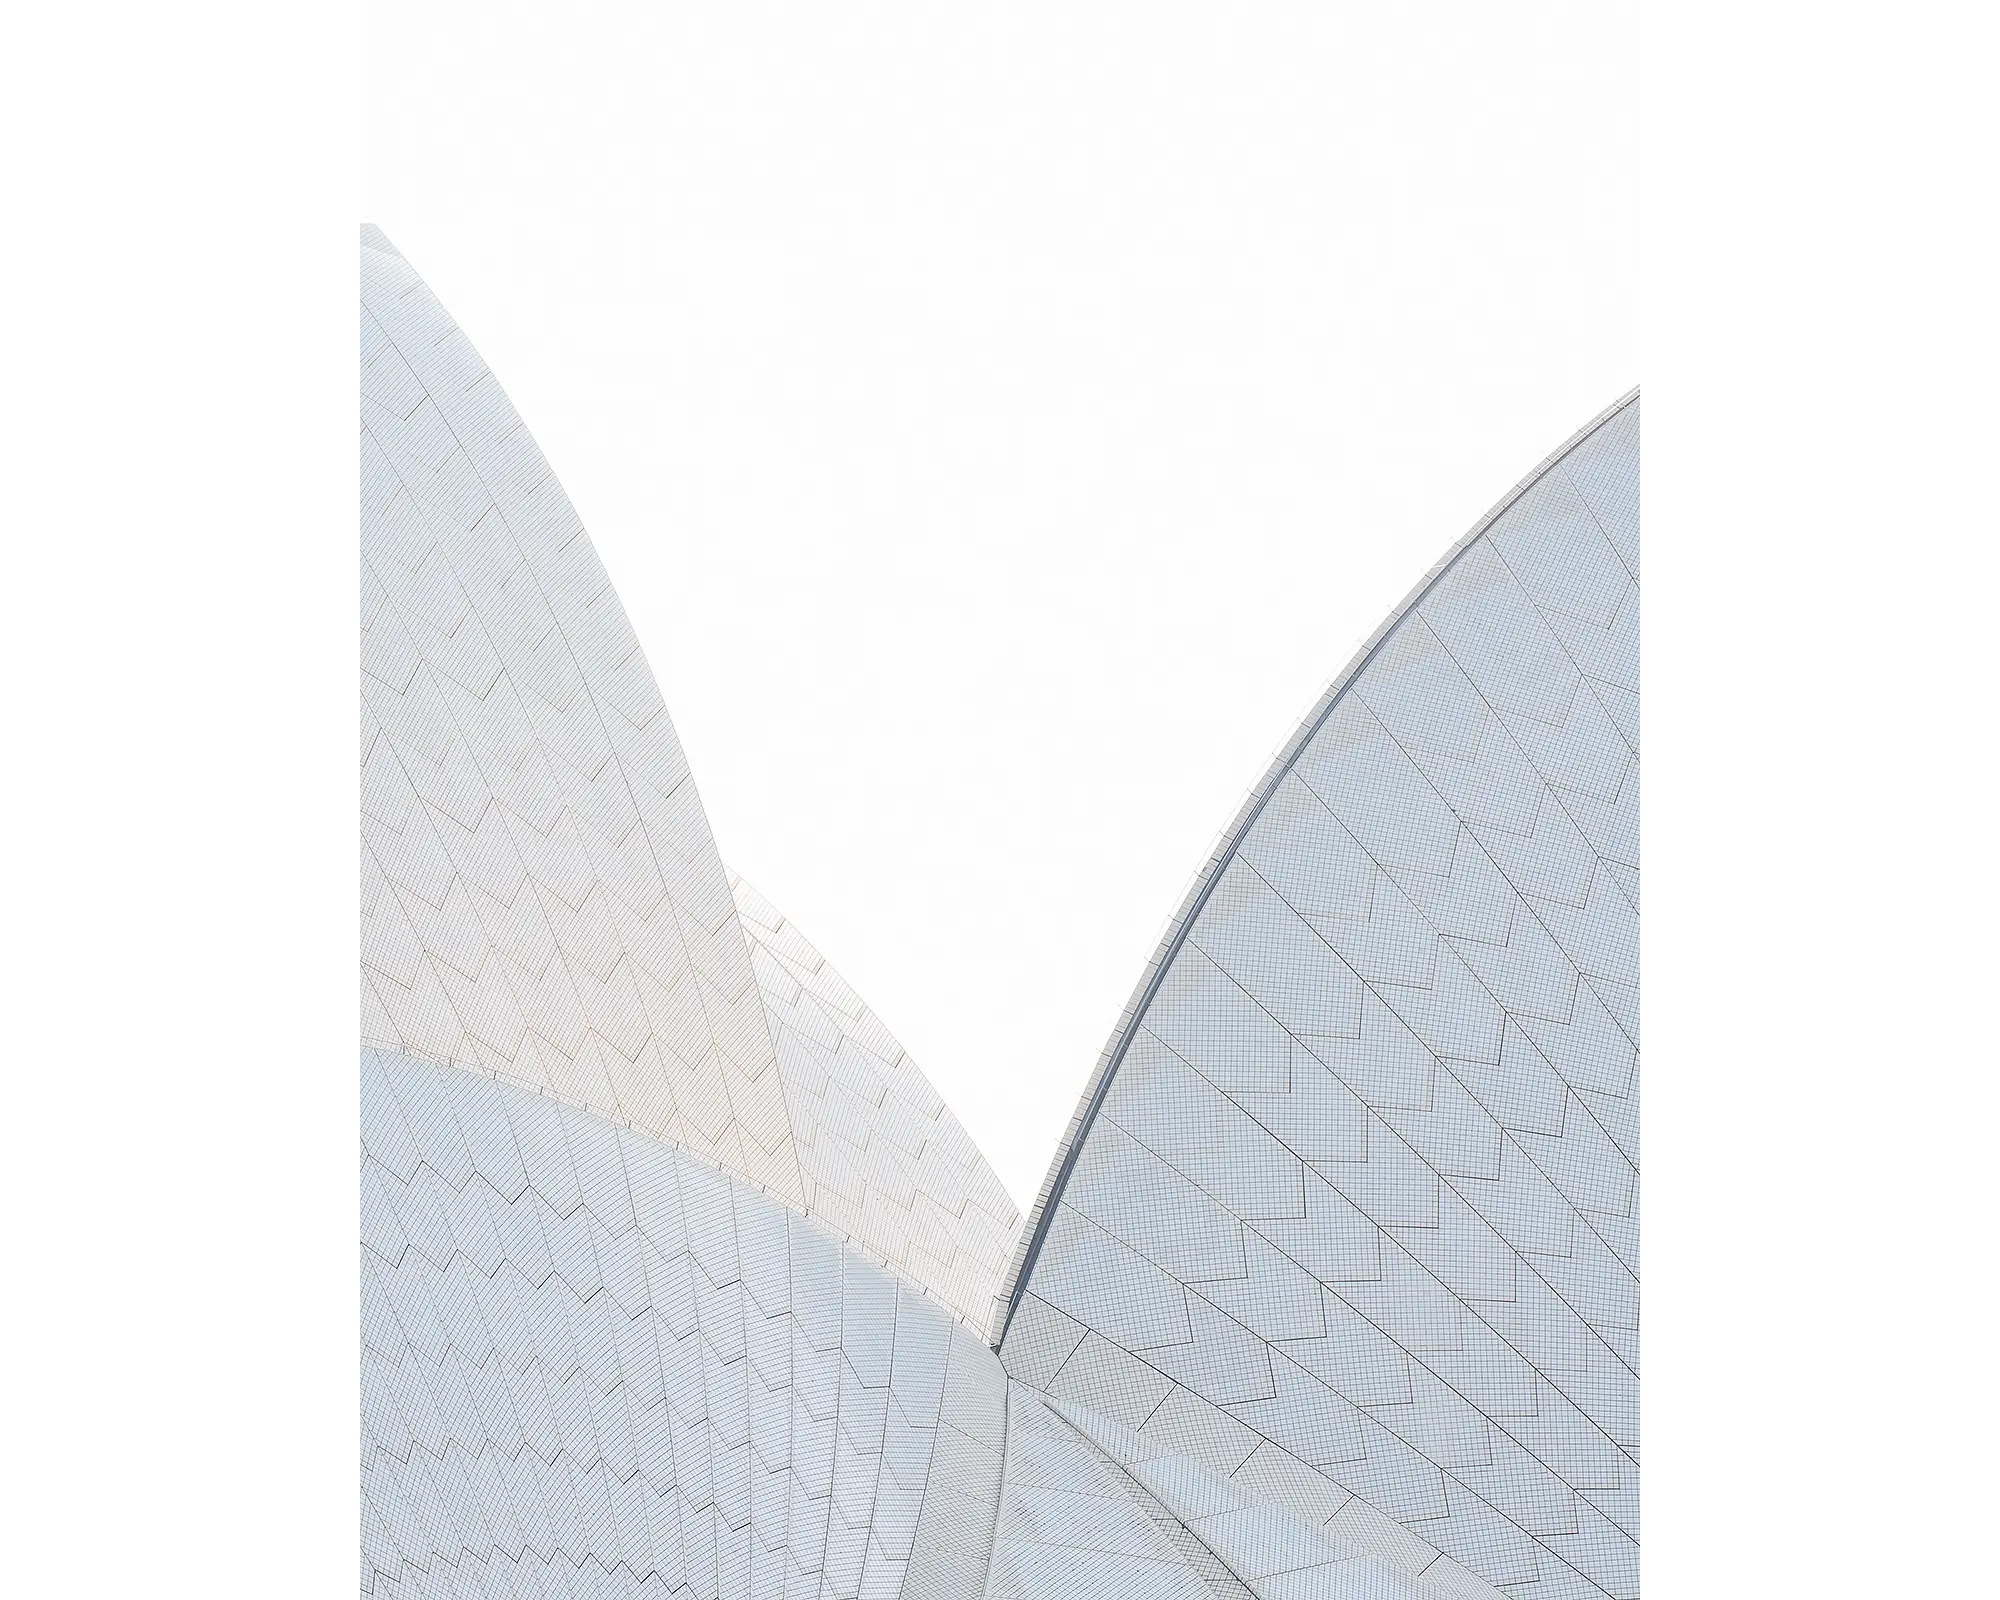 White On White. Sydney Opera House shells.